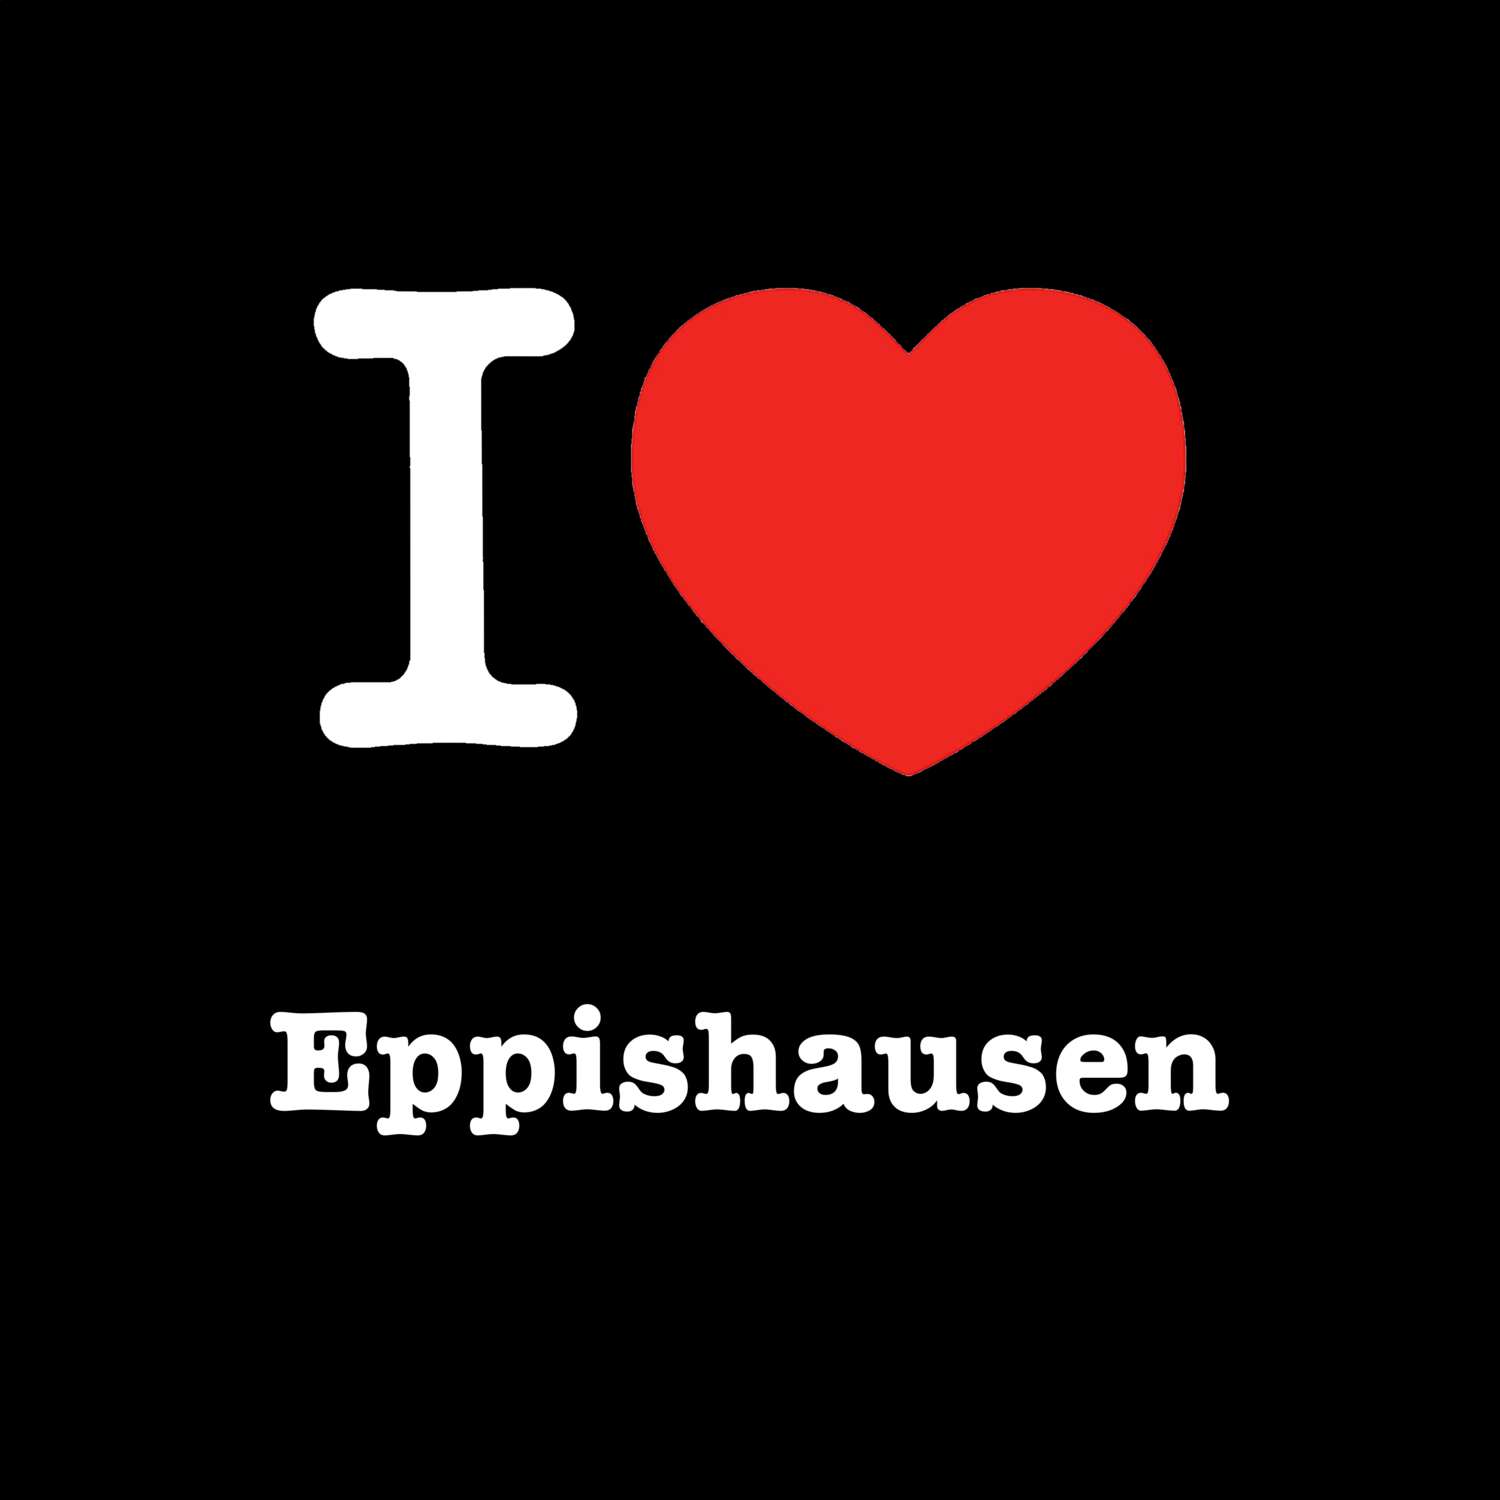 Eppishausen T-Shirt »I love«